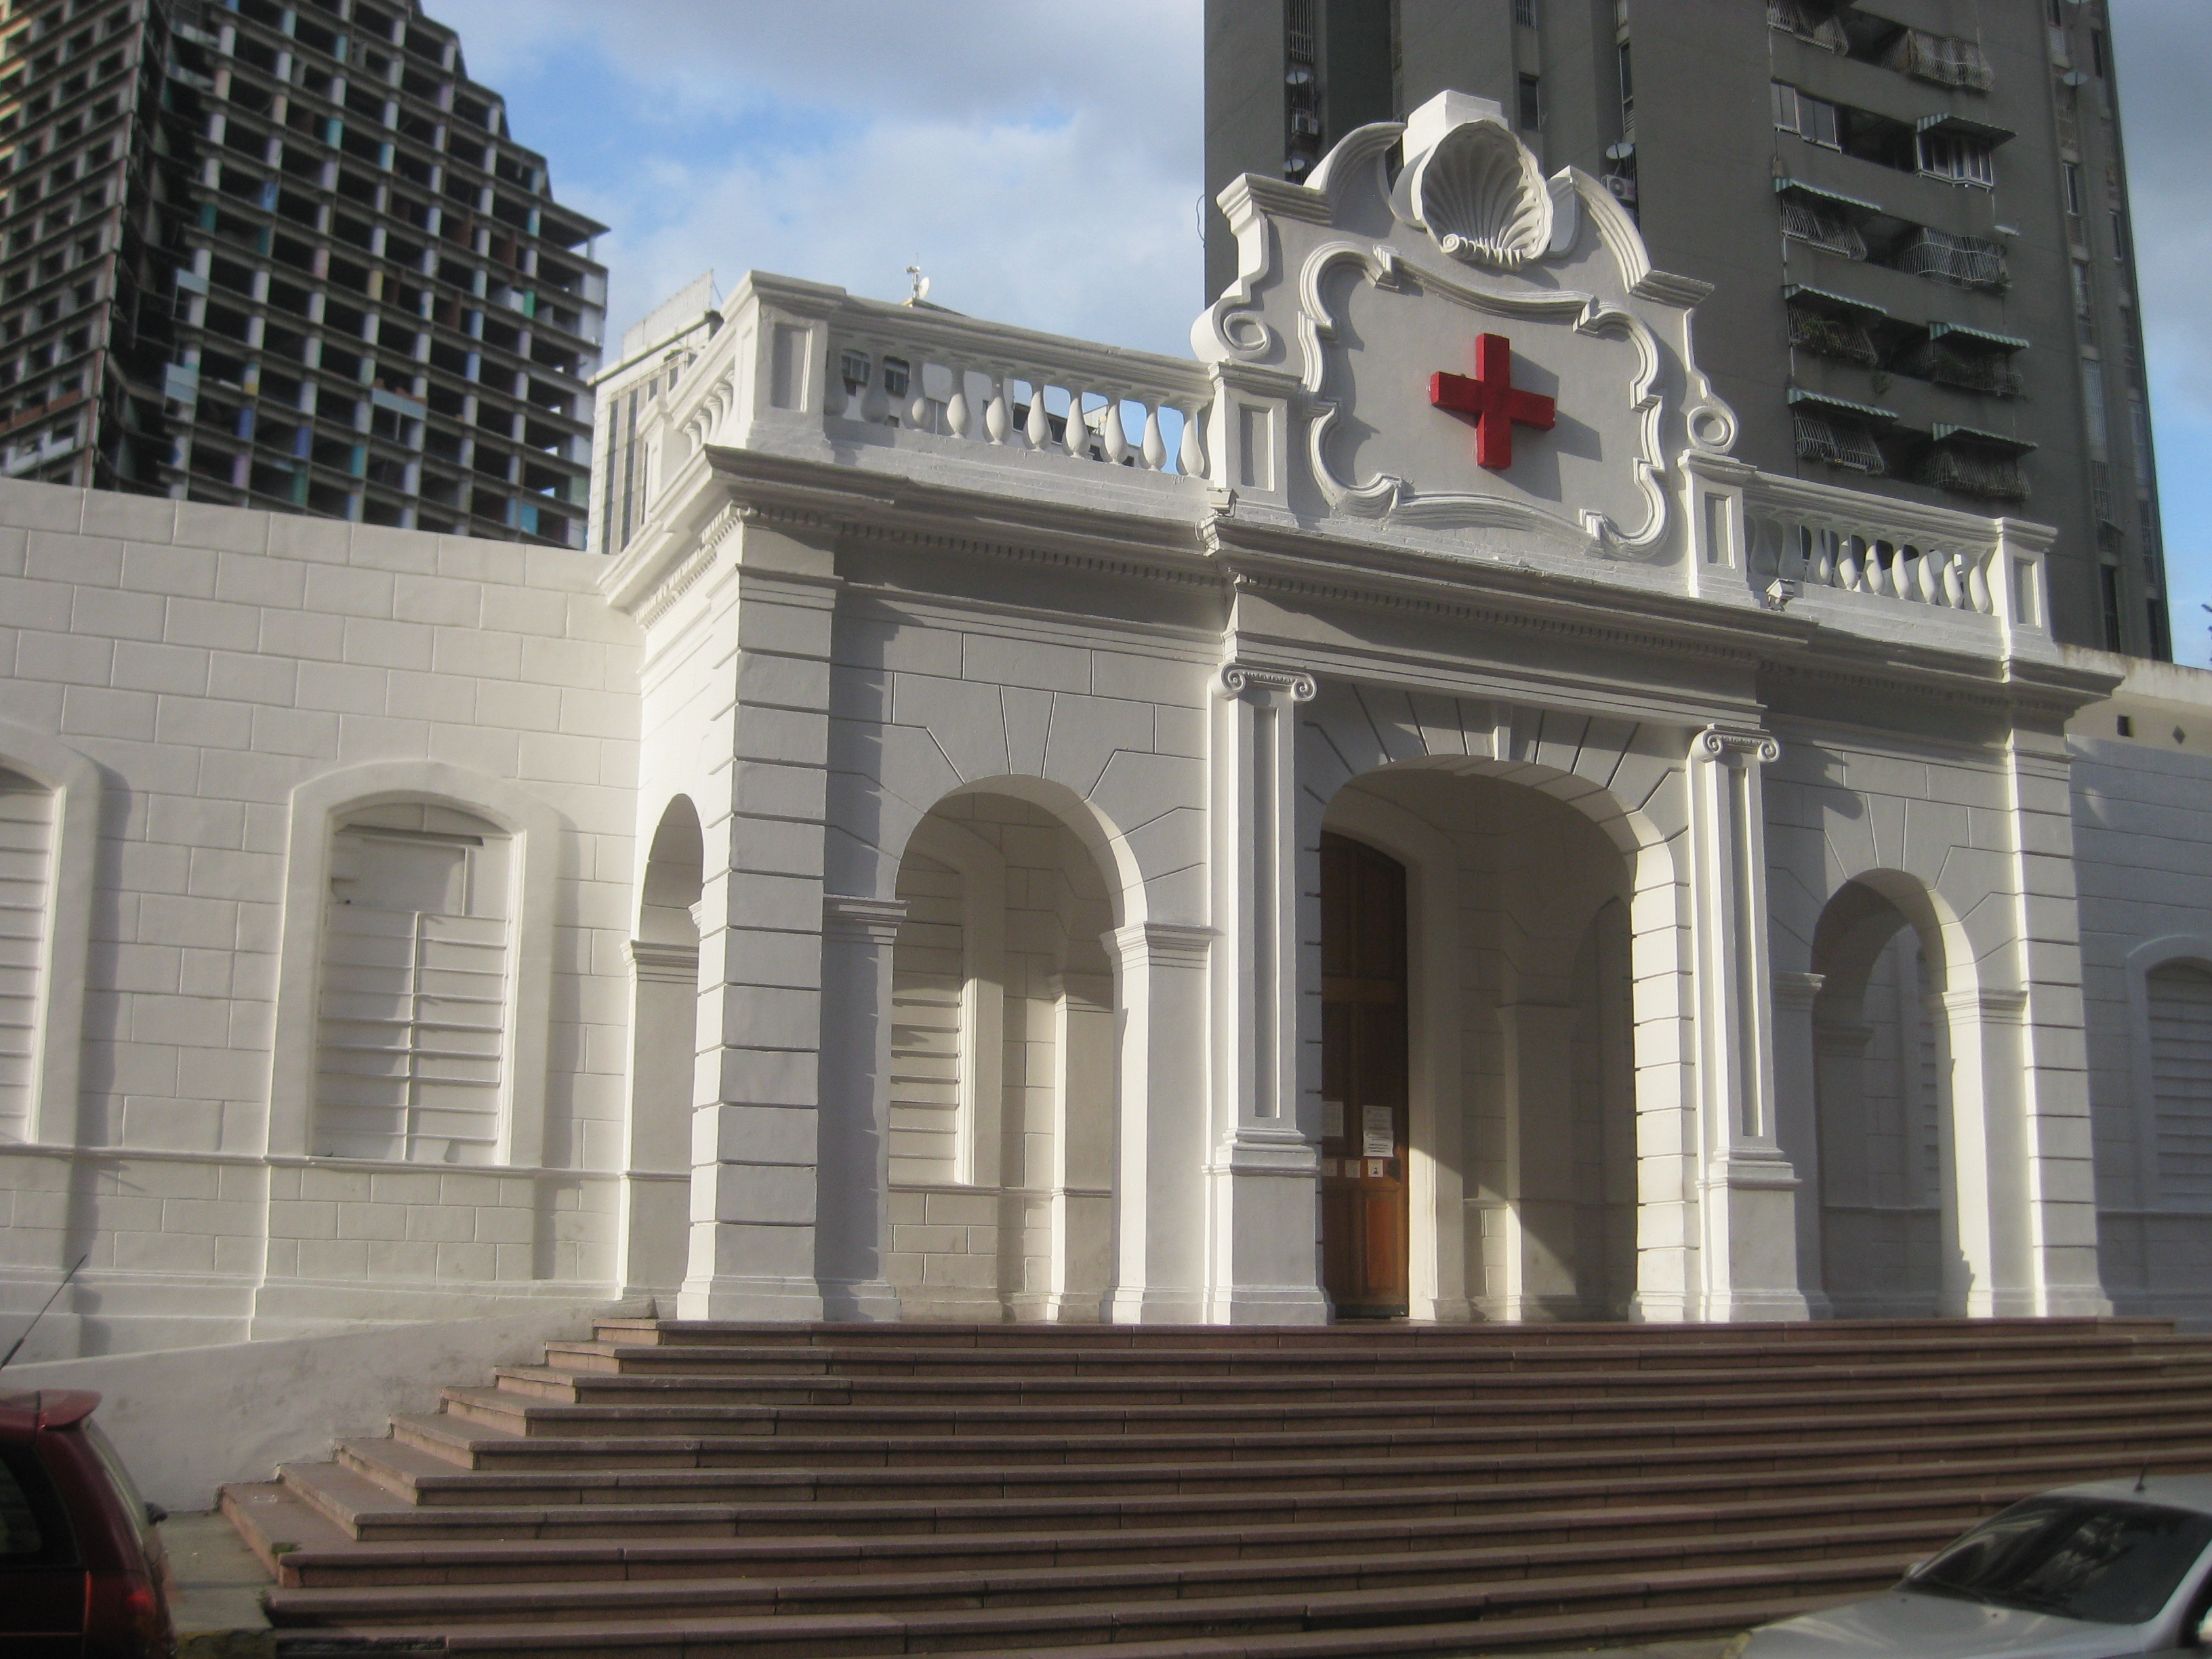 Carlos J. Bello Children's Hospital, headquarters of the Venezuelan Red Cross Society.